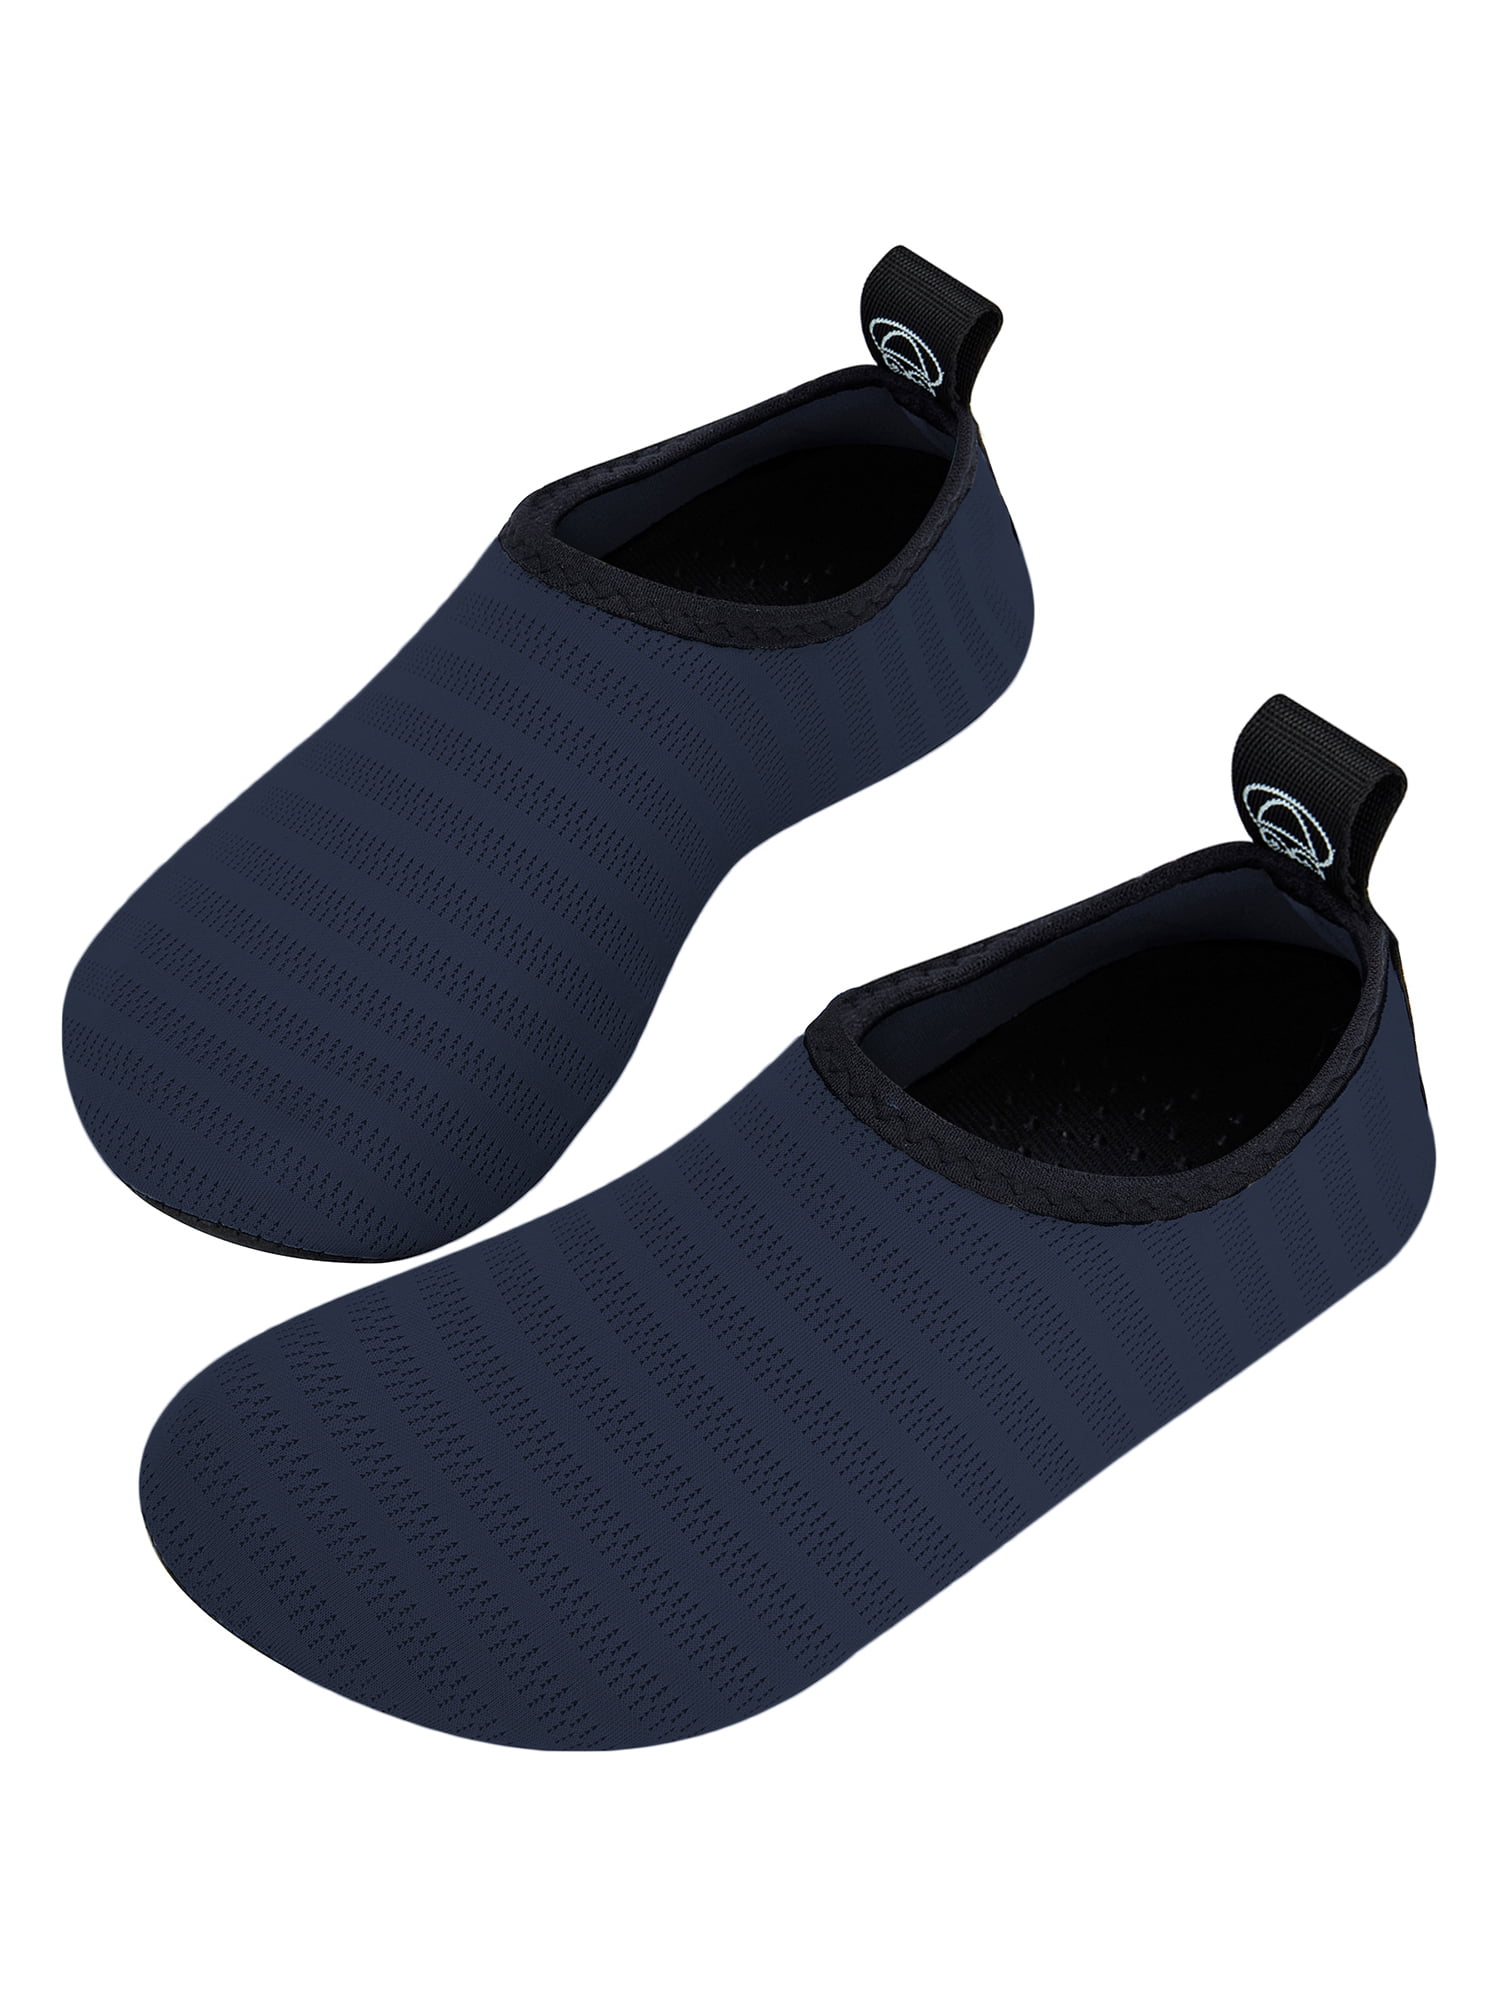 Men Women Water Shoes Soft Barefoot Slip-on Shoes,Quick-Dry Aqua Shoes Yoga Socks for Surf Swim Diving Water Sport 